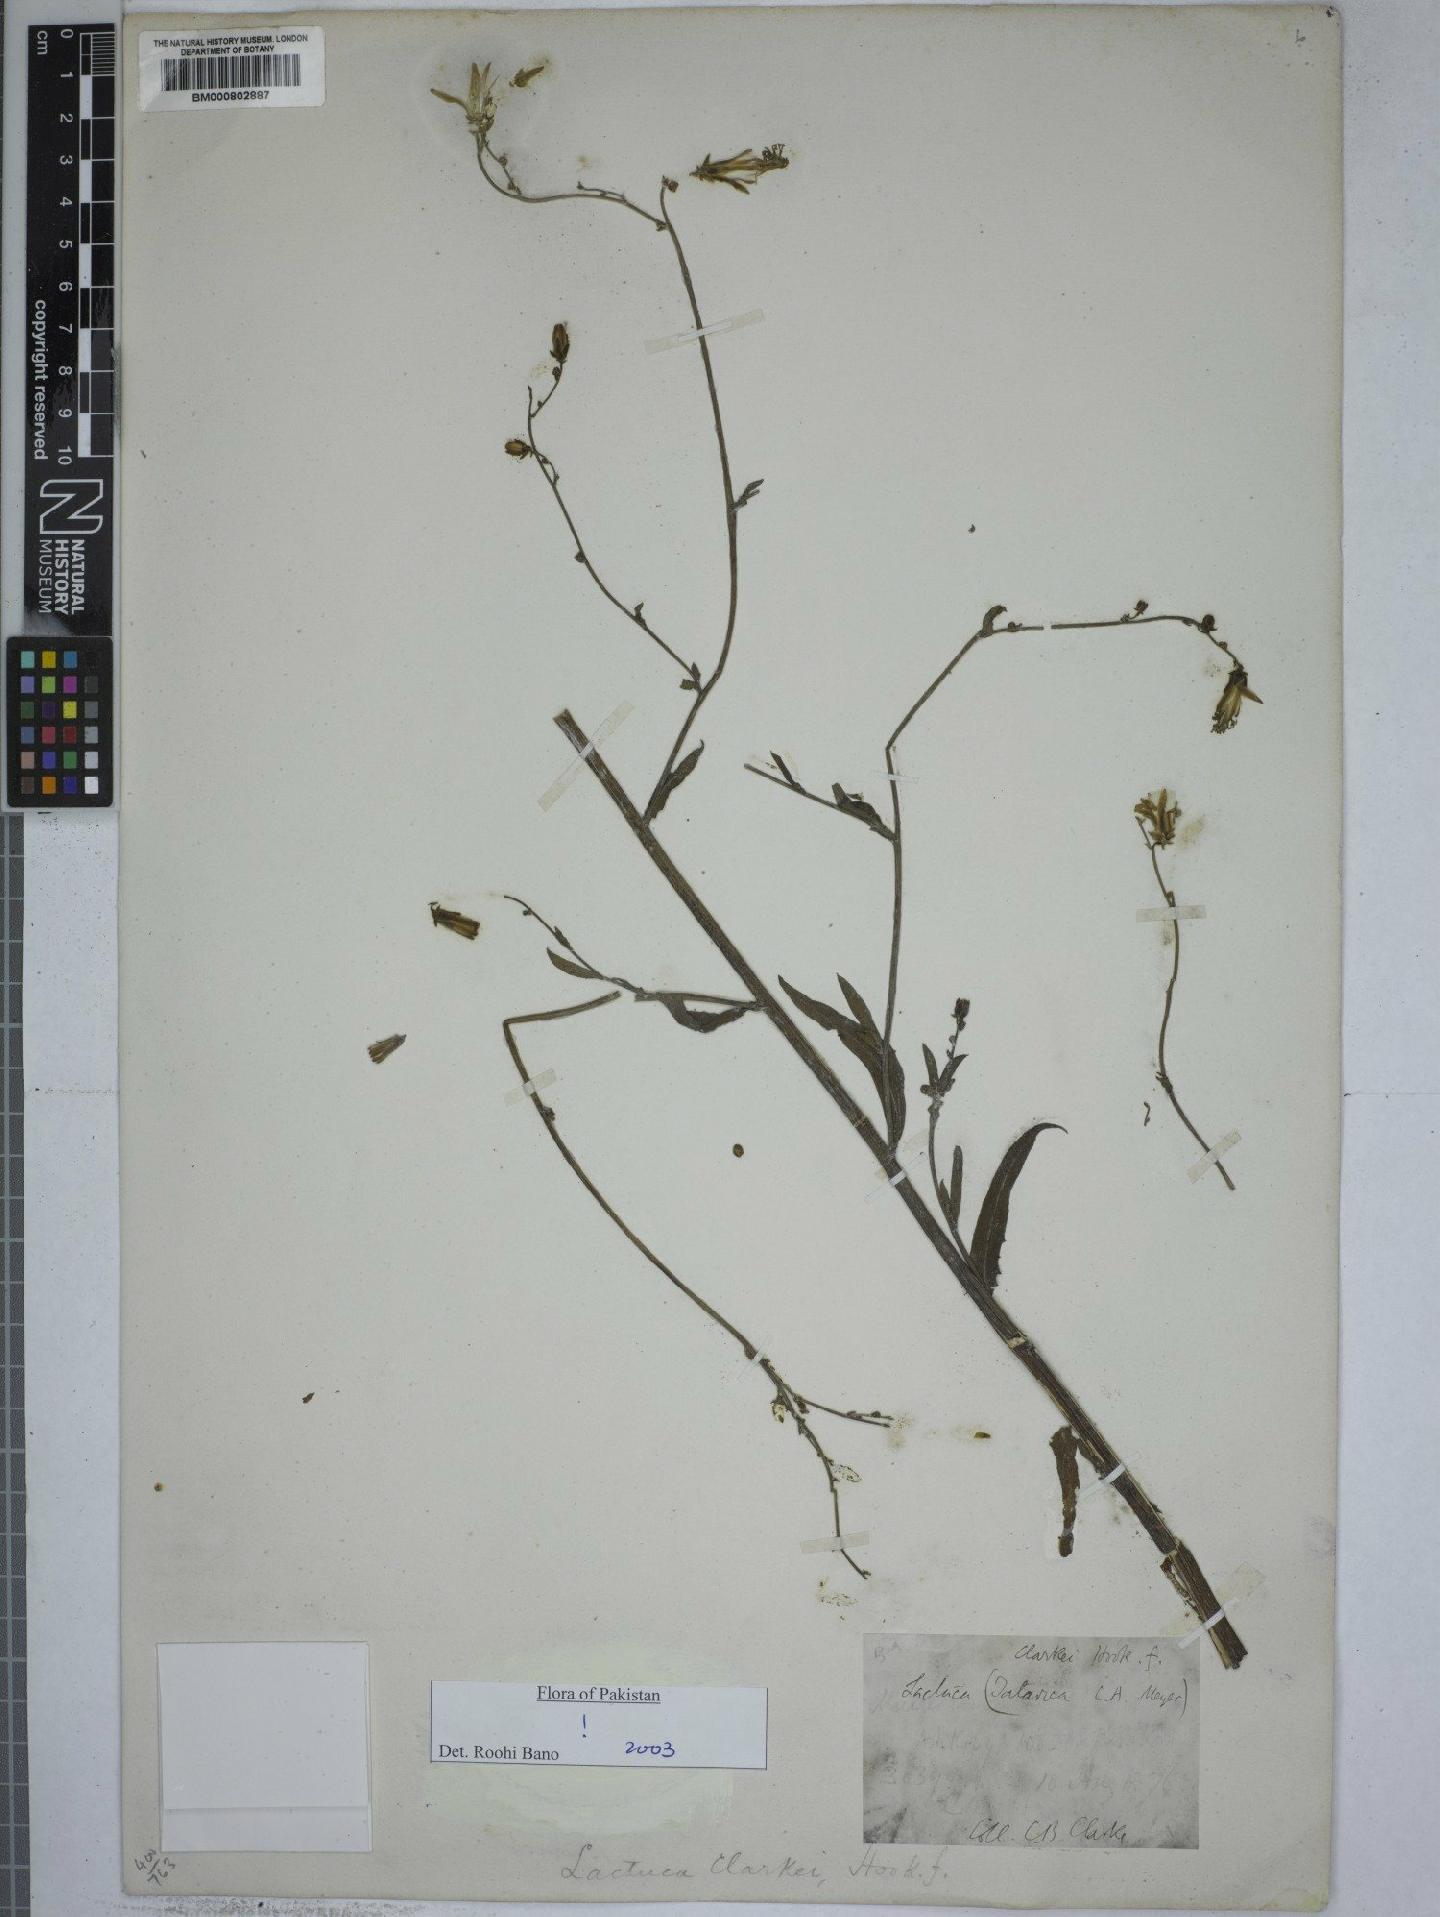 To NHMUK collection (Lactuca clarkei Hook.f.; NHMUK:ecatalogue:4973885)